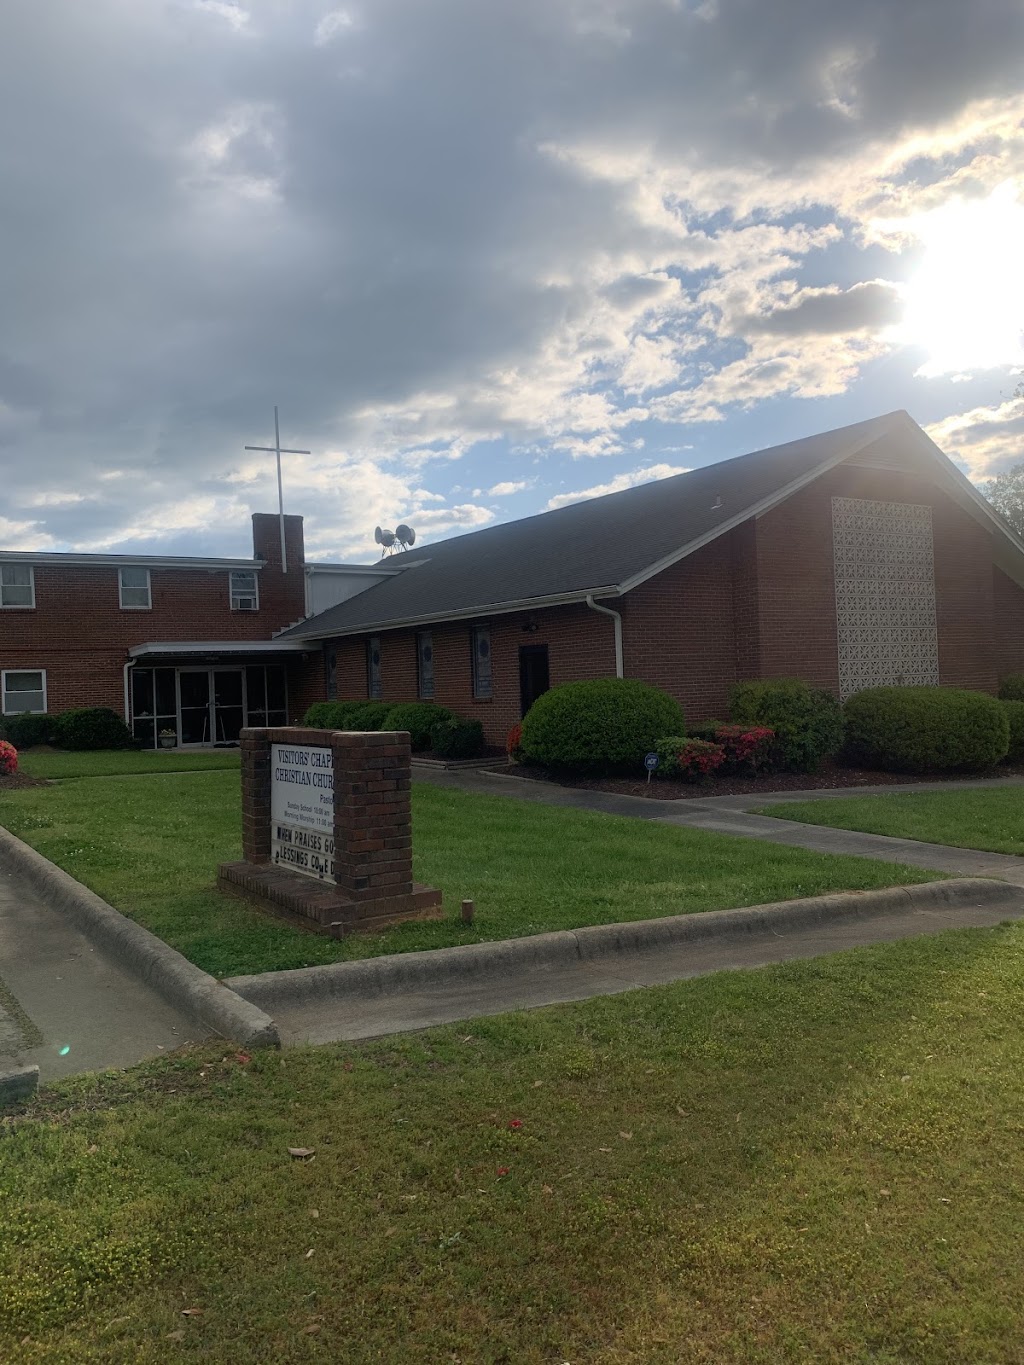 Visitors Chapel Christian Church | 1321 Jackson St, Burlington, NC 27217, USA | Phone: (336) 228-6727